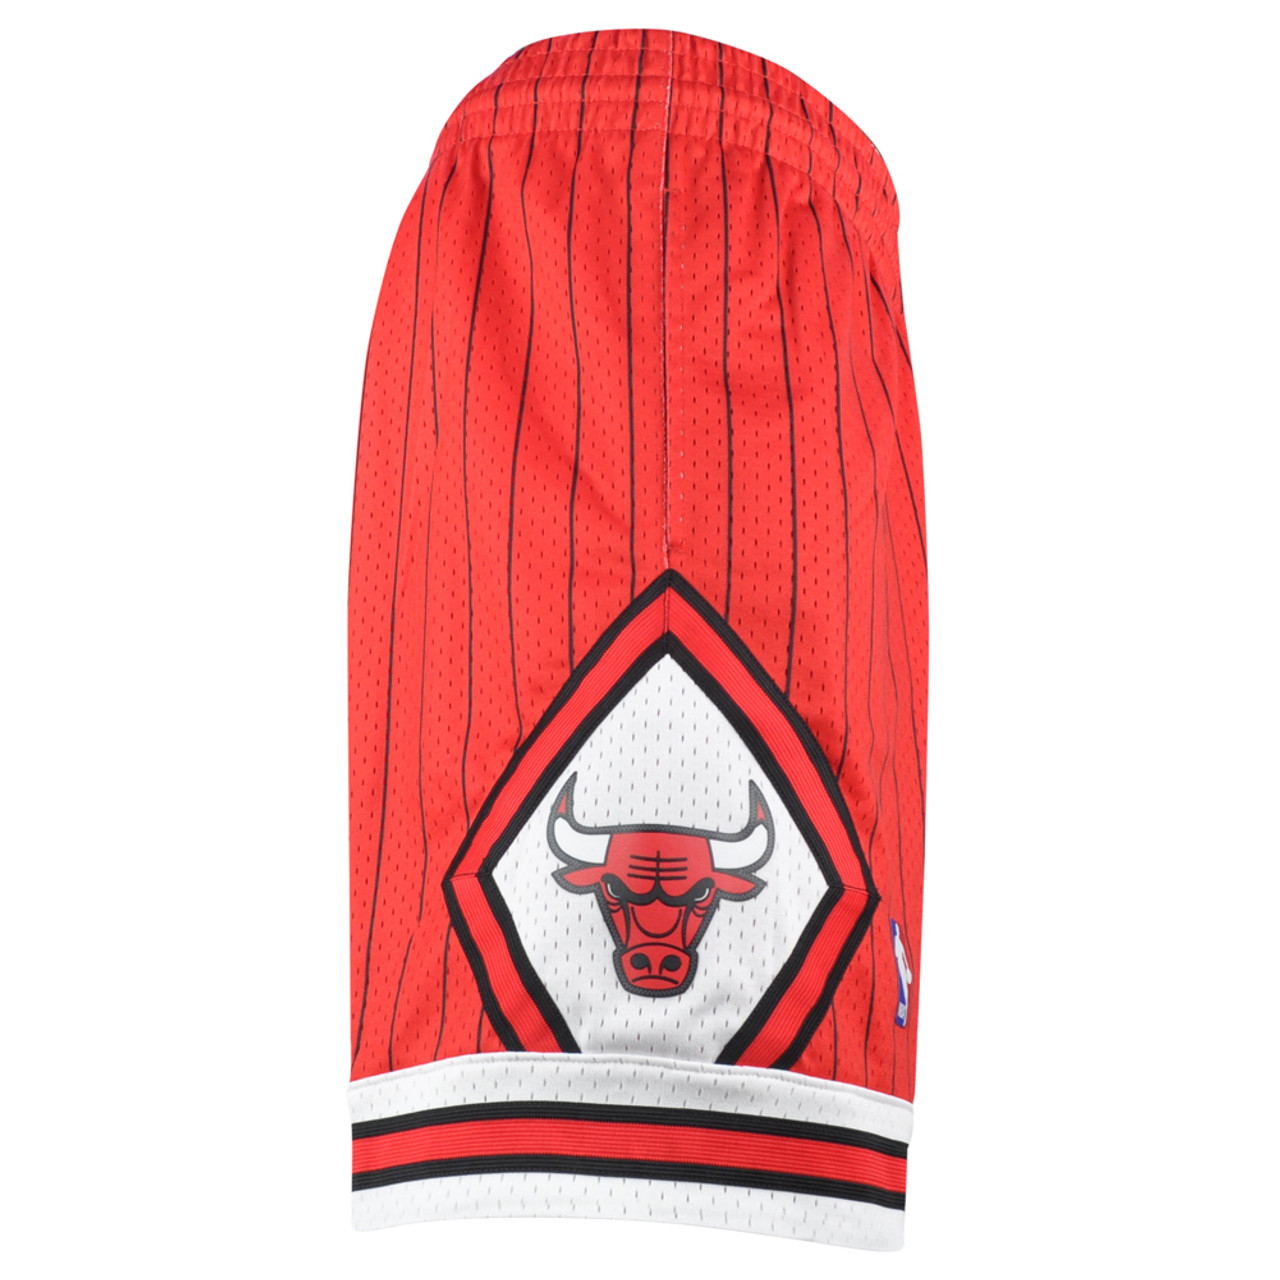 NBA Mitchell Ness Chicago Bulls Fadeaway 95 Swingman Adult Basketball Shorts